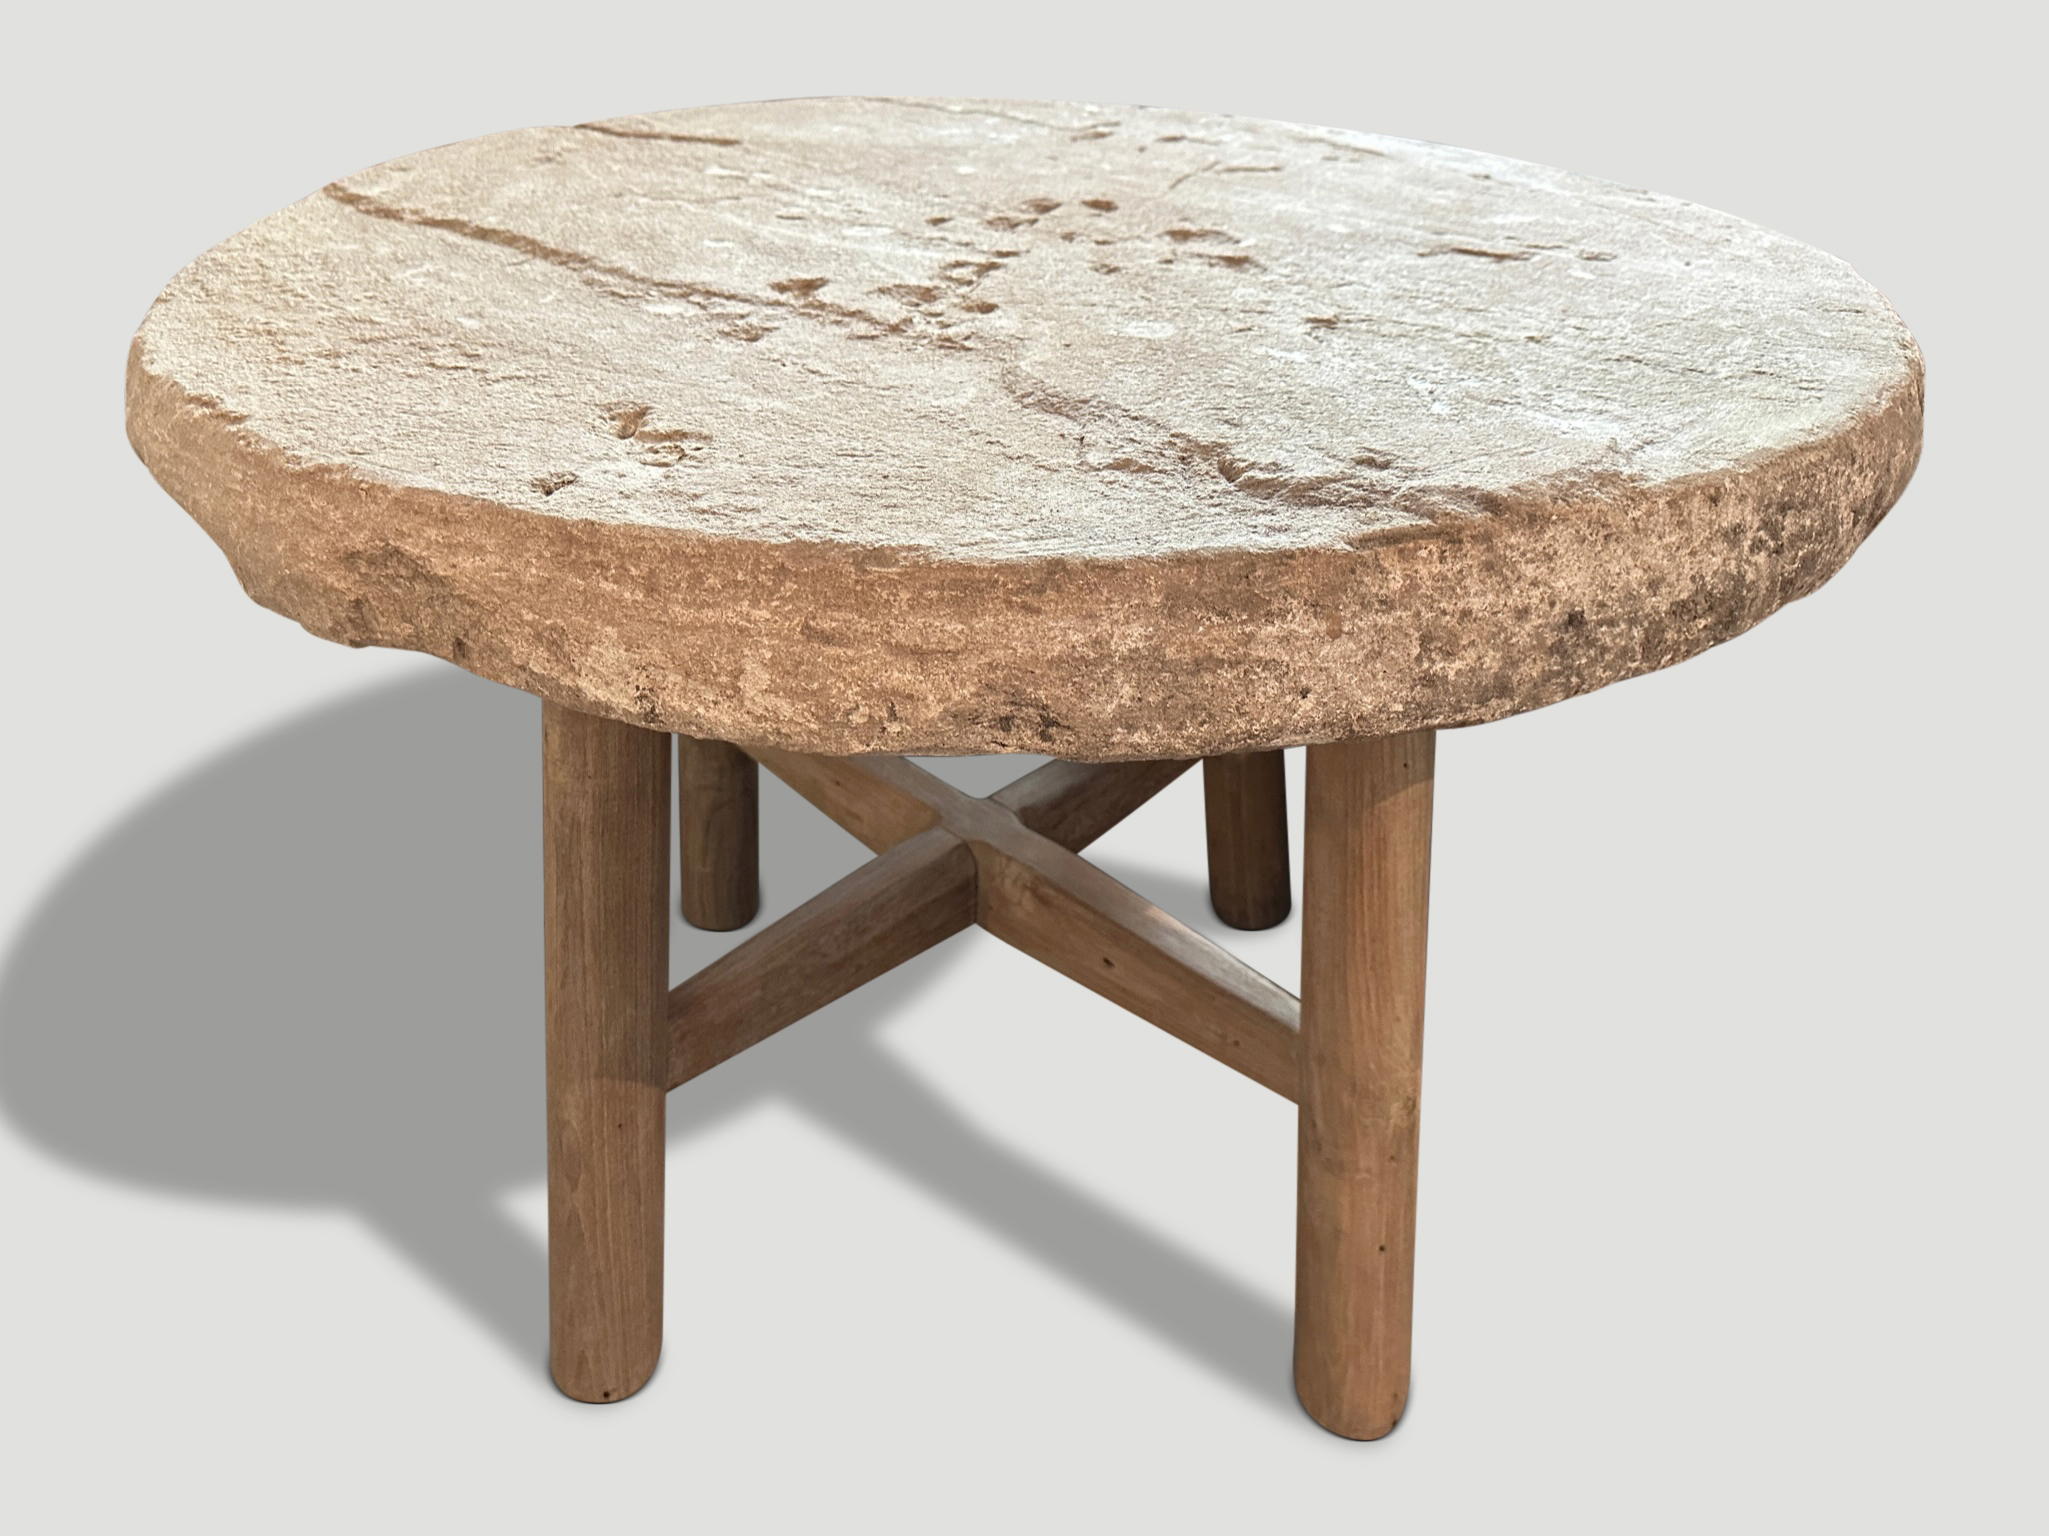 Sumba stone table